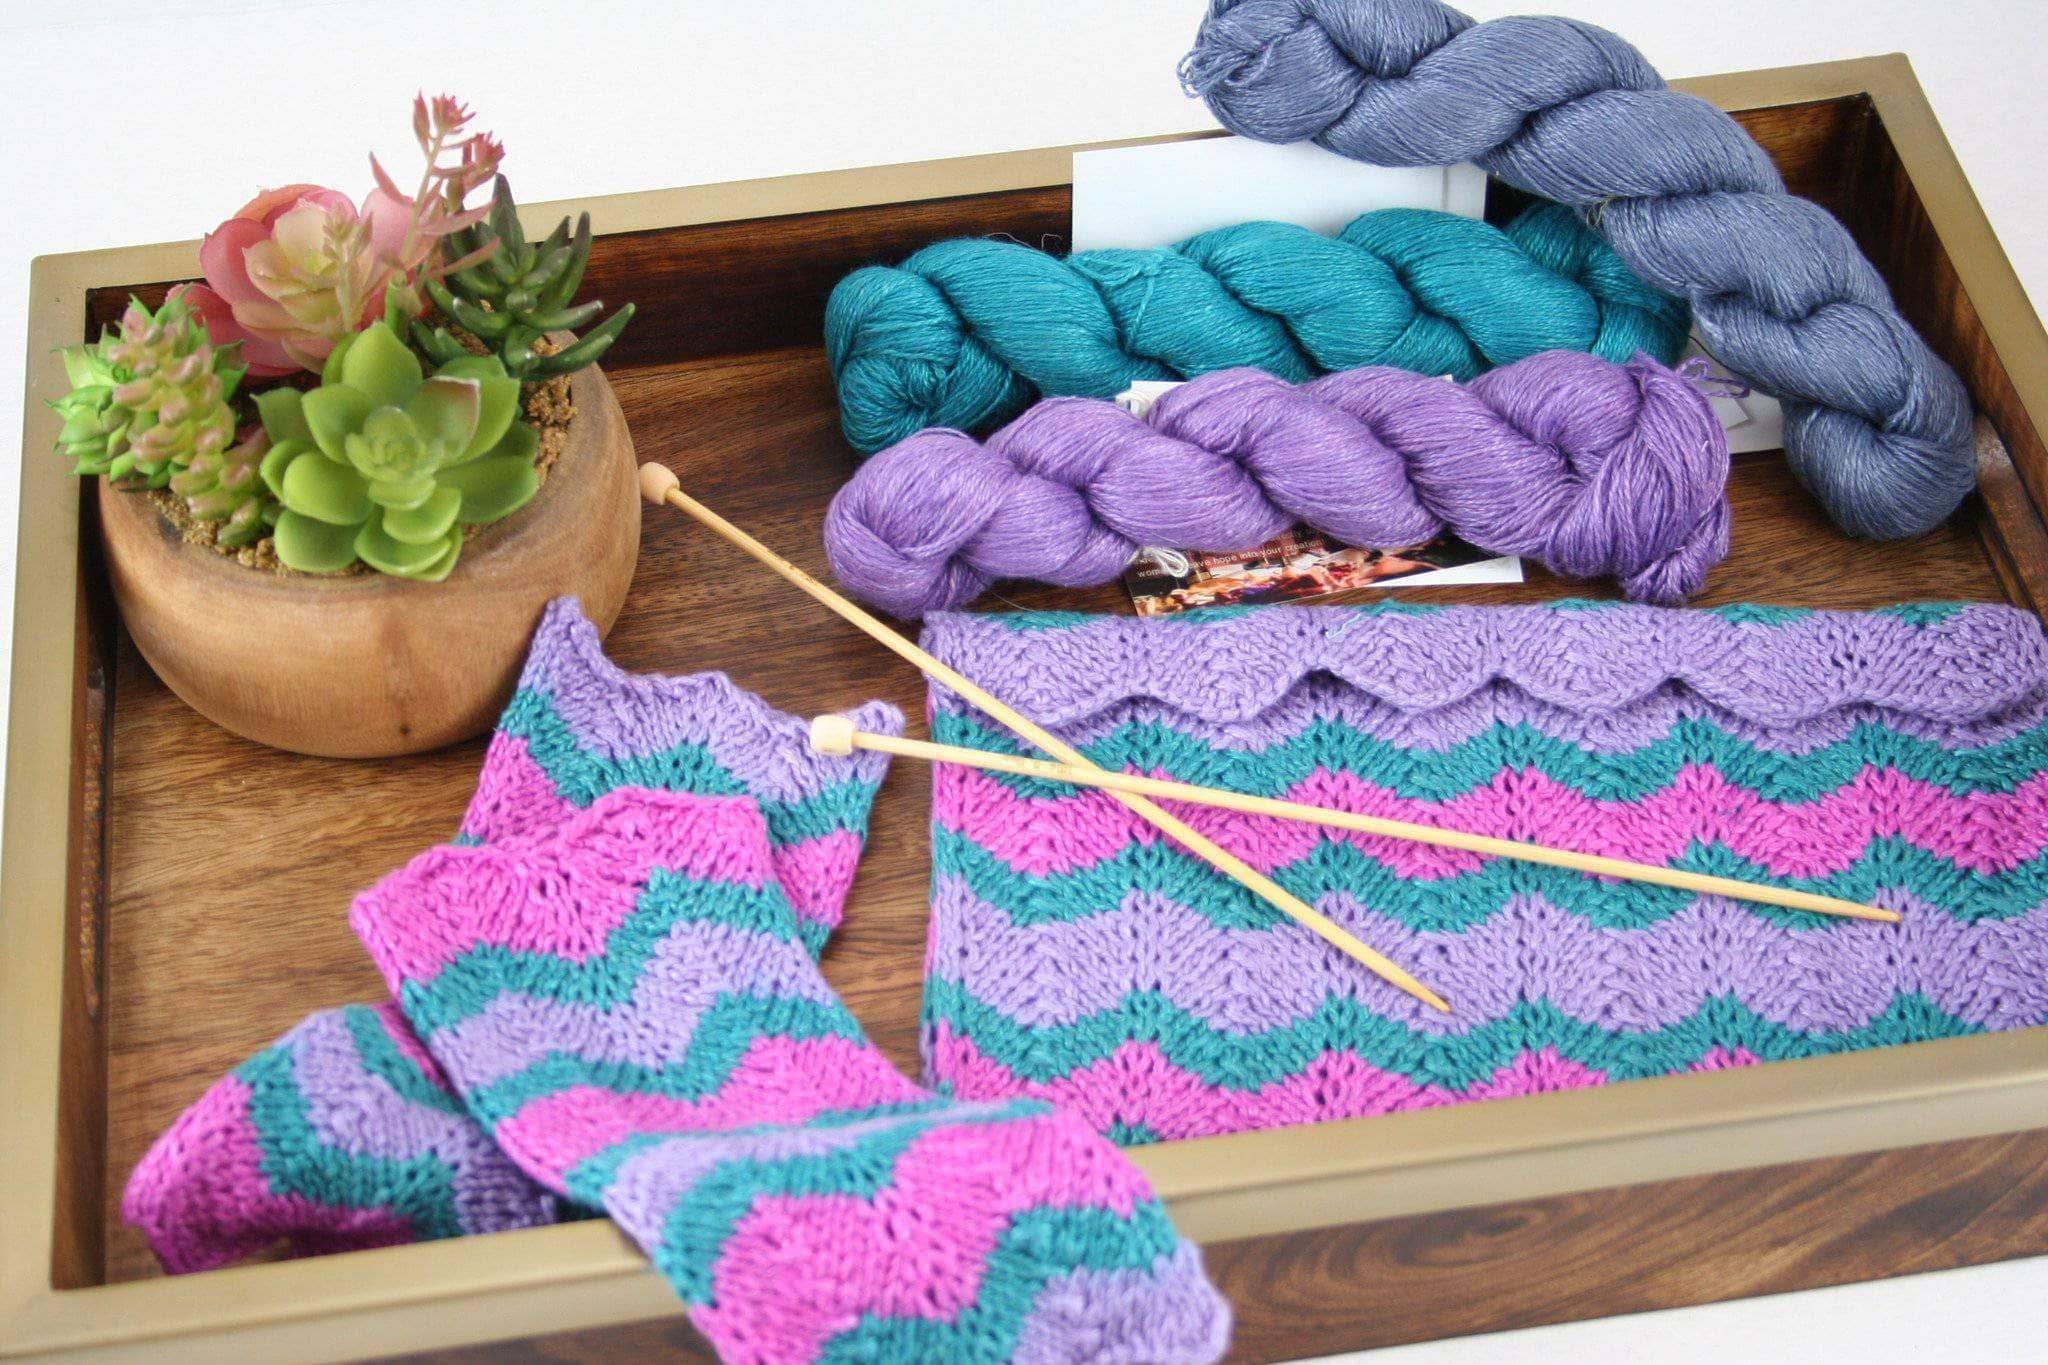 5 Health Benefits of Knitting and Crocheting - Darn Good Yarn